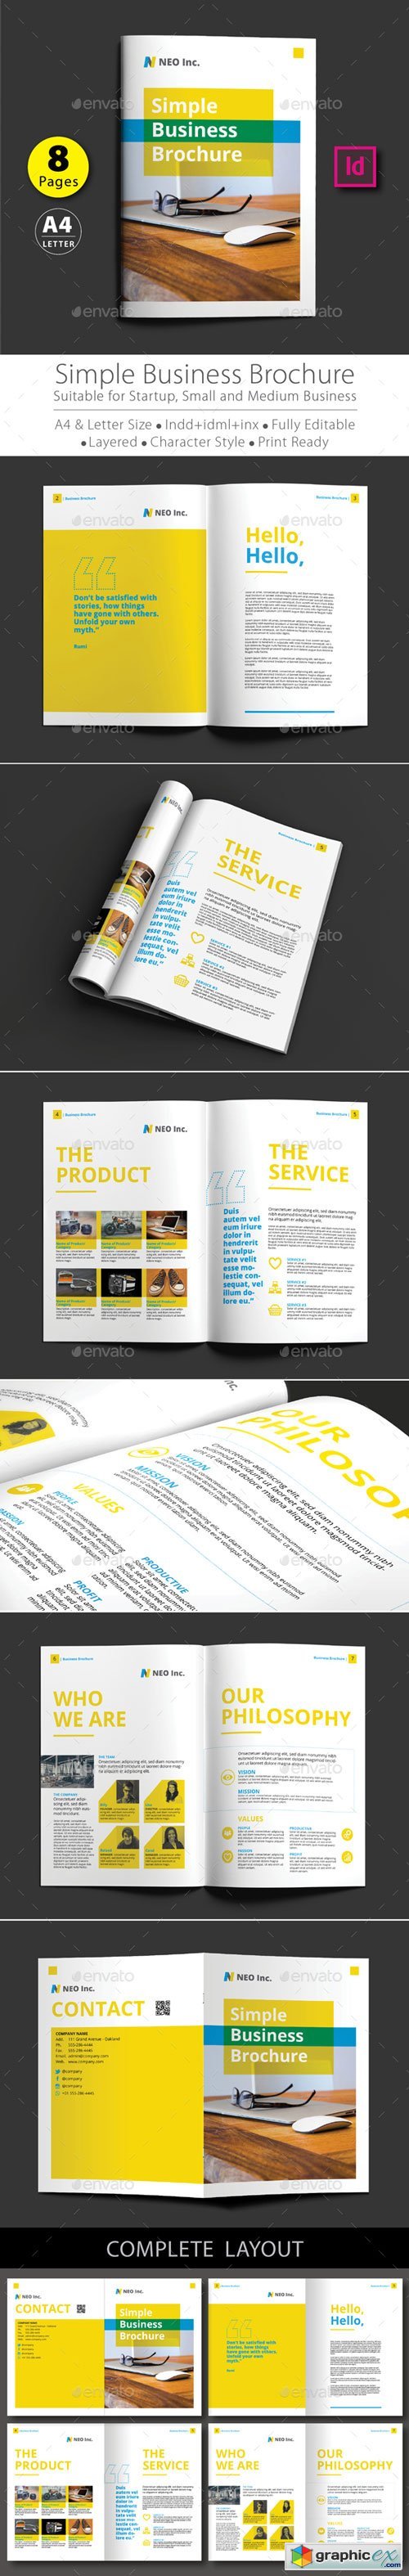 Simple Business Brochure Template V.1